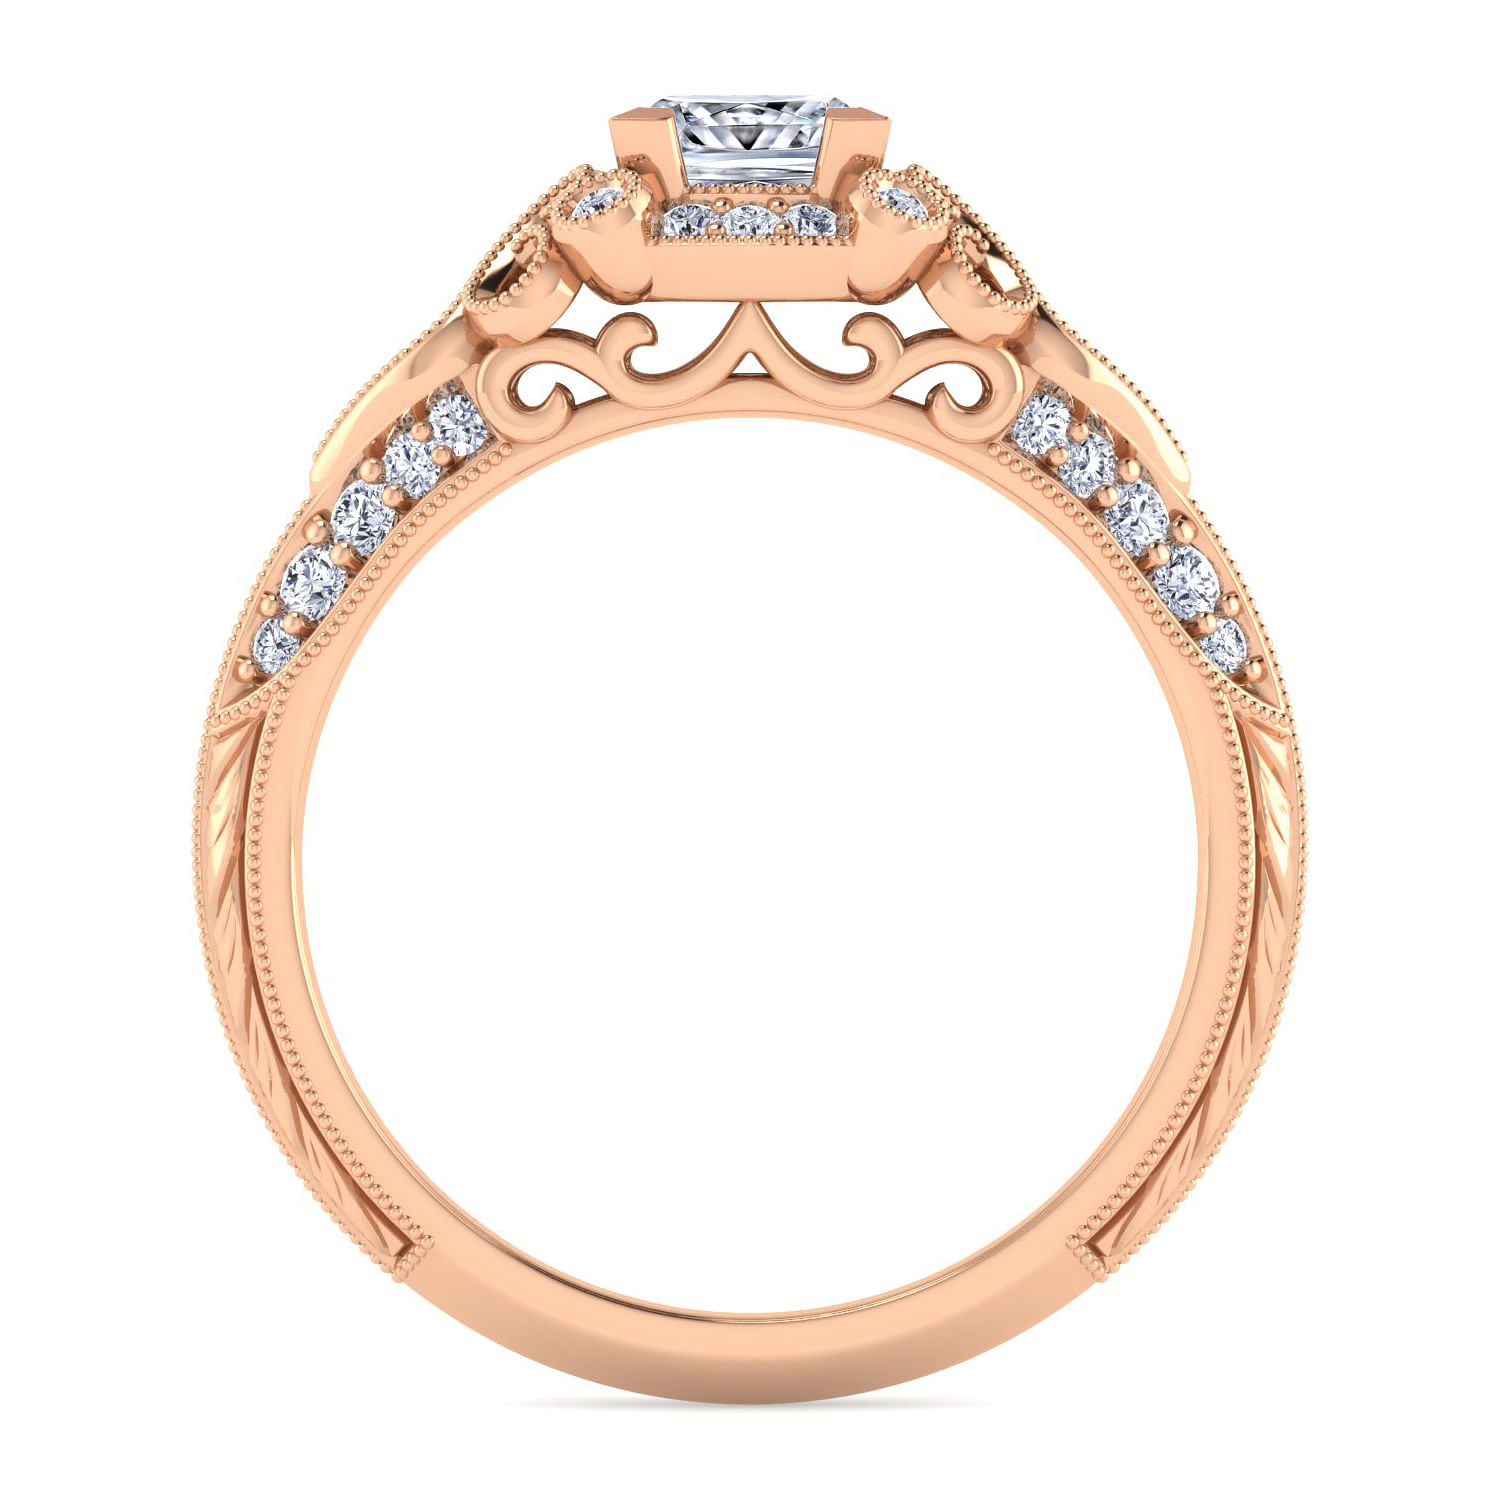 Unique 14K Rose Gold Vintage Inspired Princess Cut Diamond Halo Engagement Ring